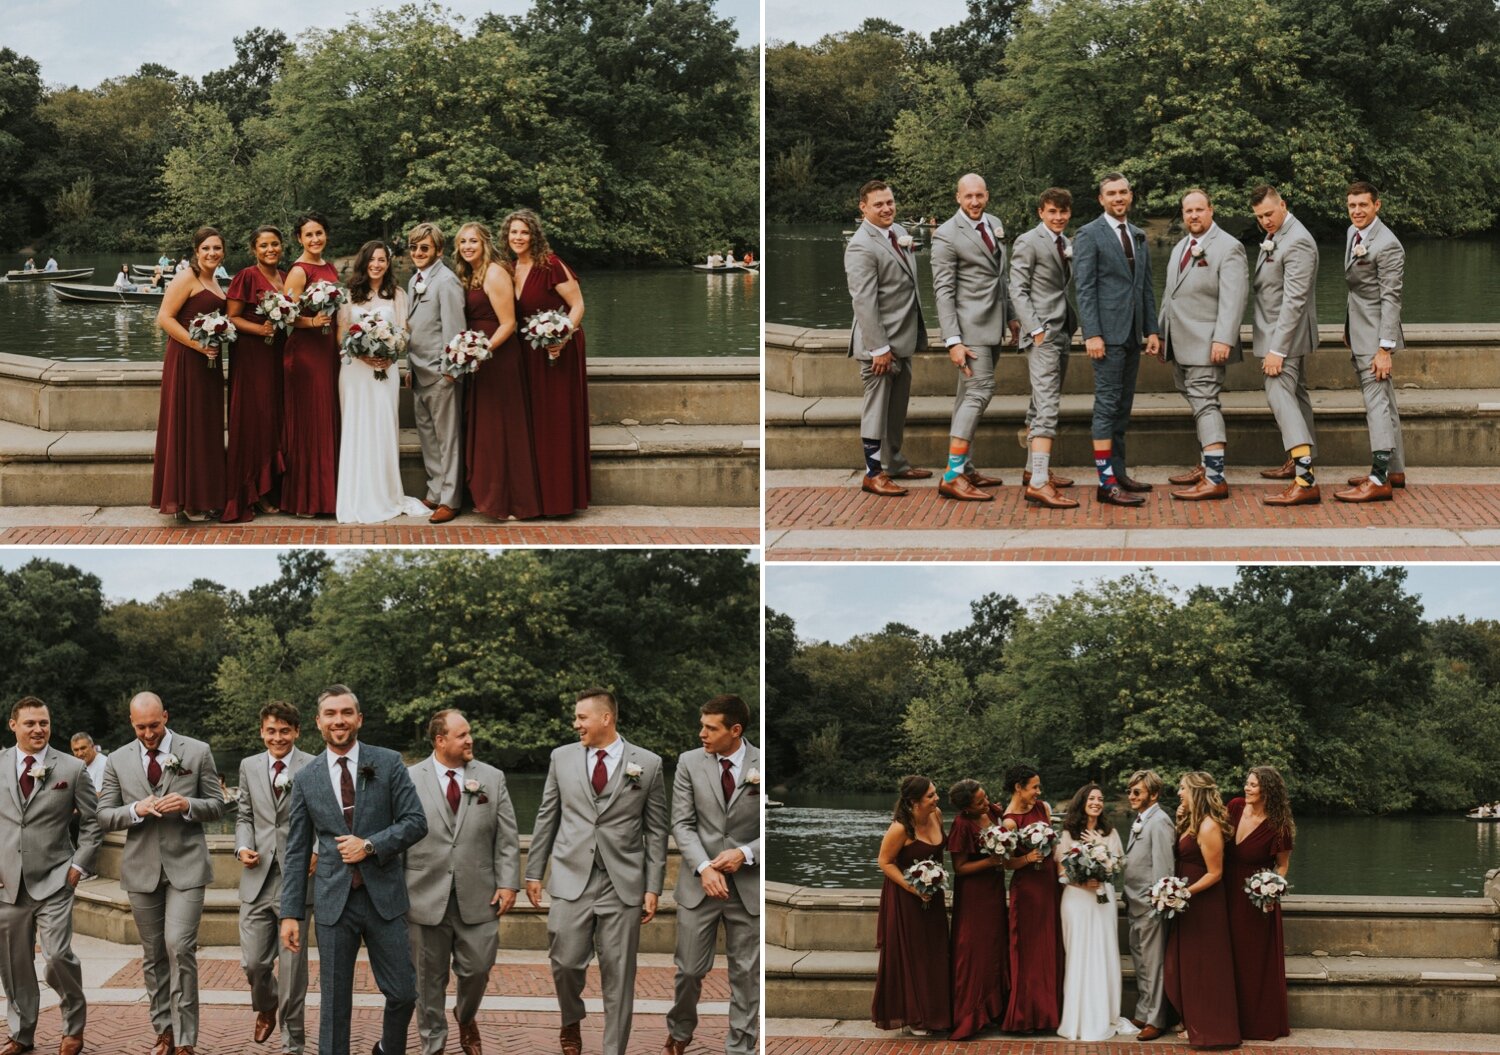 Central Park Wedding, Loeb Boathouse Wedding, Hudson Valley Wedding Photographer, New York City Wedding Photographer, Bethesda Terrace, Bow Bridge